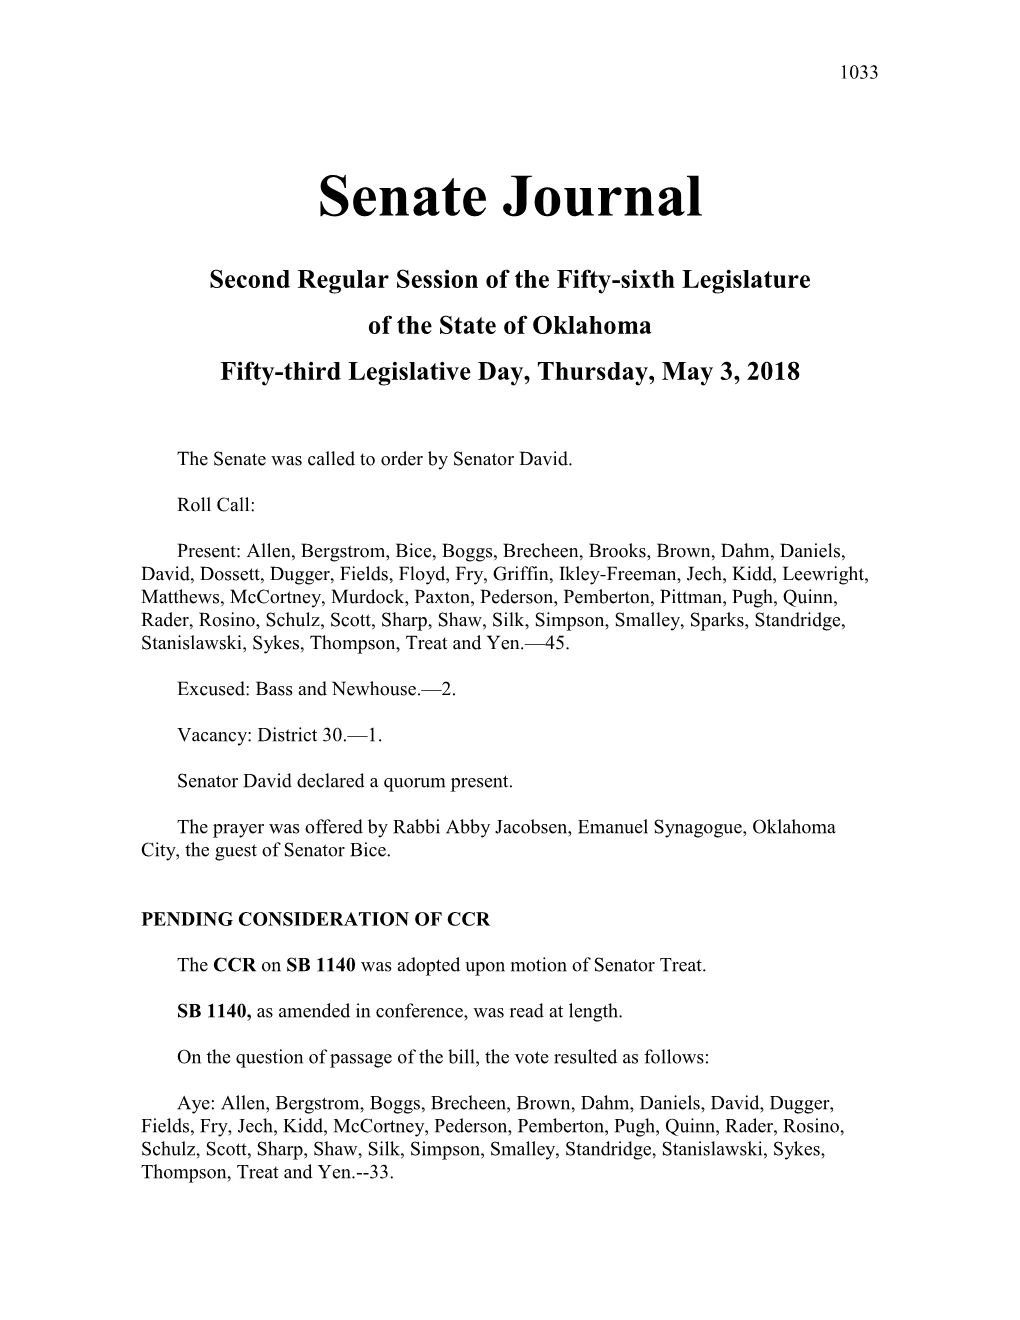 Senate Journal May 03, 2018